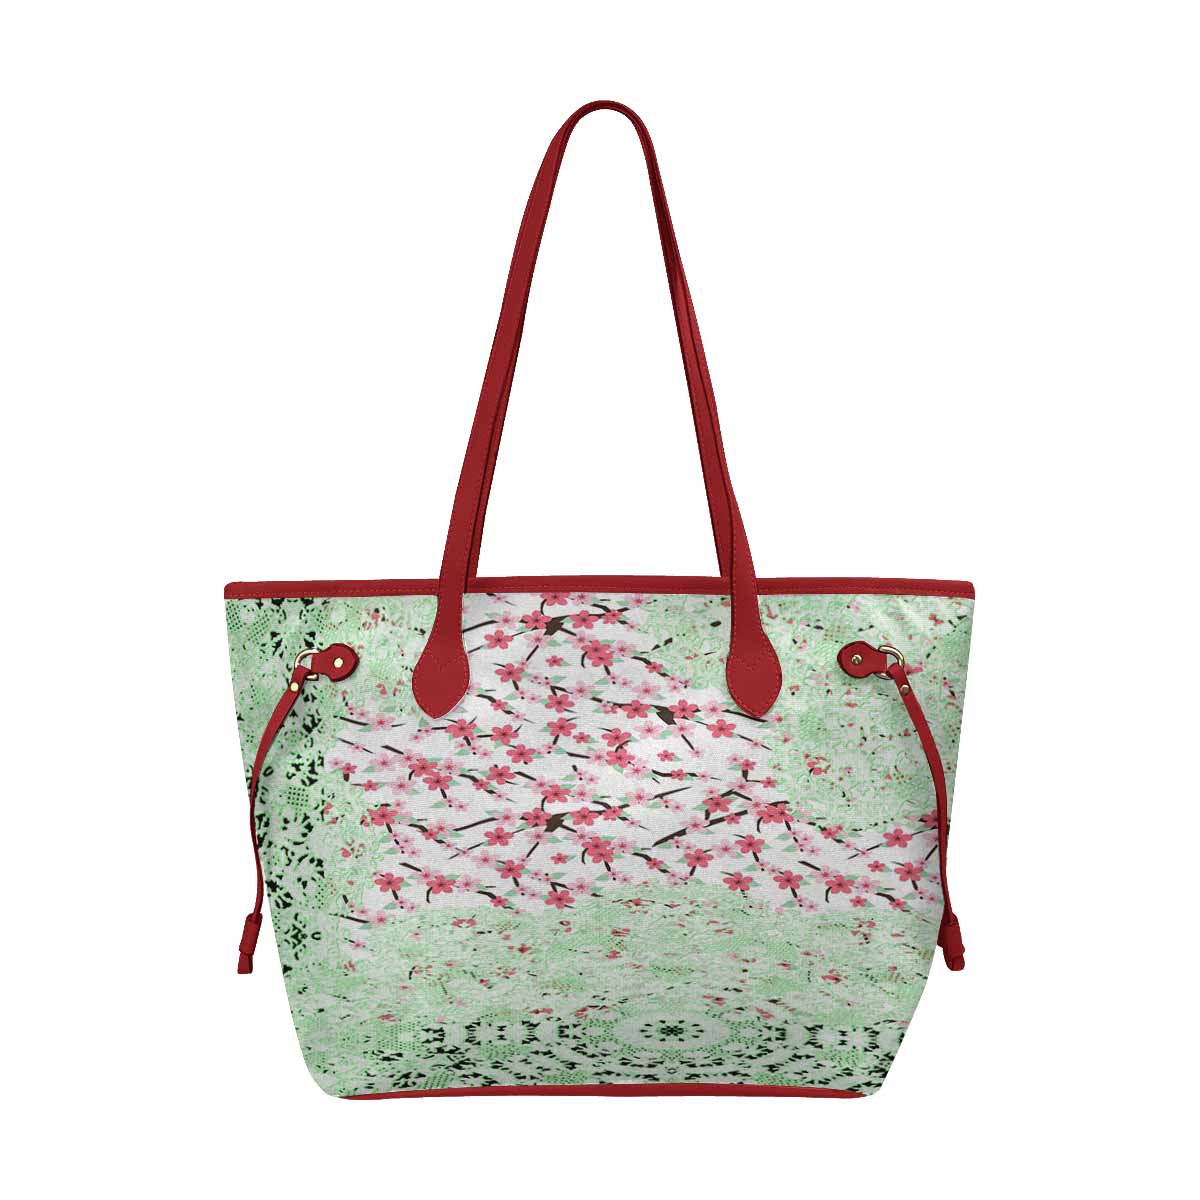 Victorian printed lace handbag, MODEL 1695361 Design 10